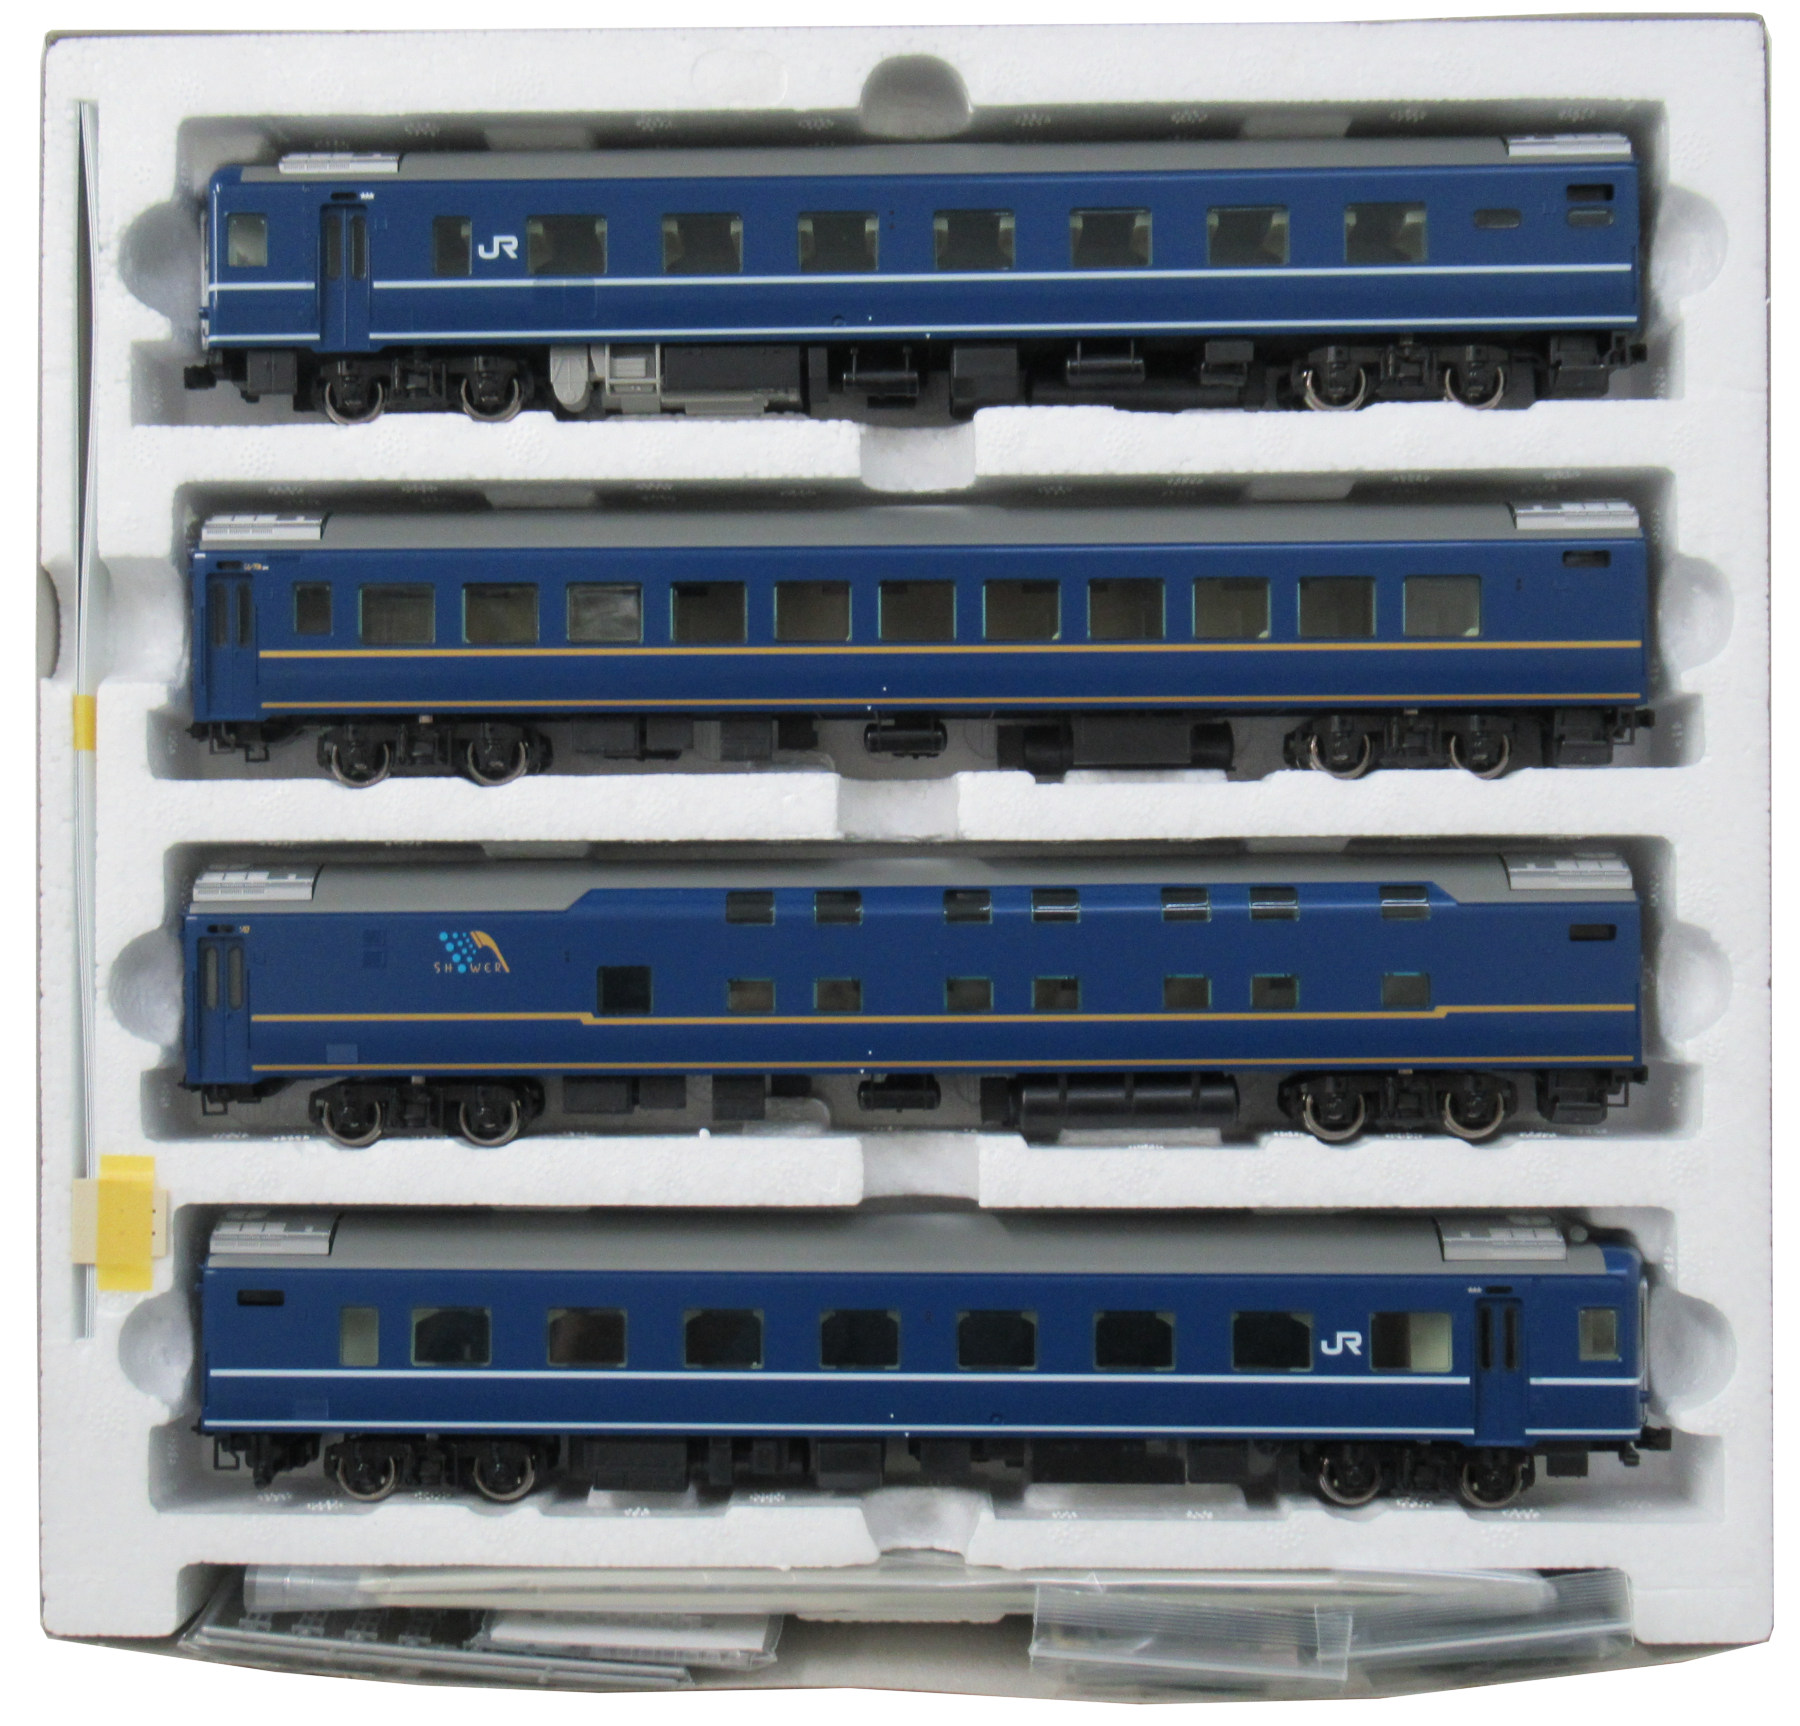 公式]鉄道模型(HO-9057JR 14系14形特急寝台客車(北陸) 基本セット)商品 